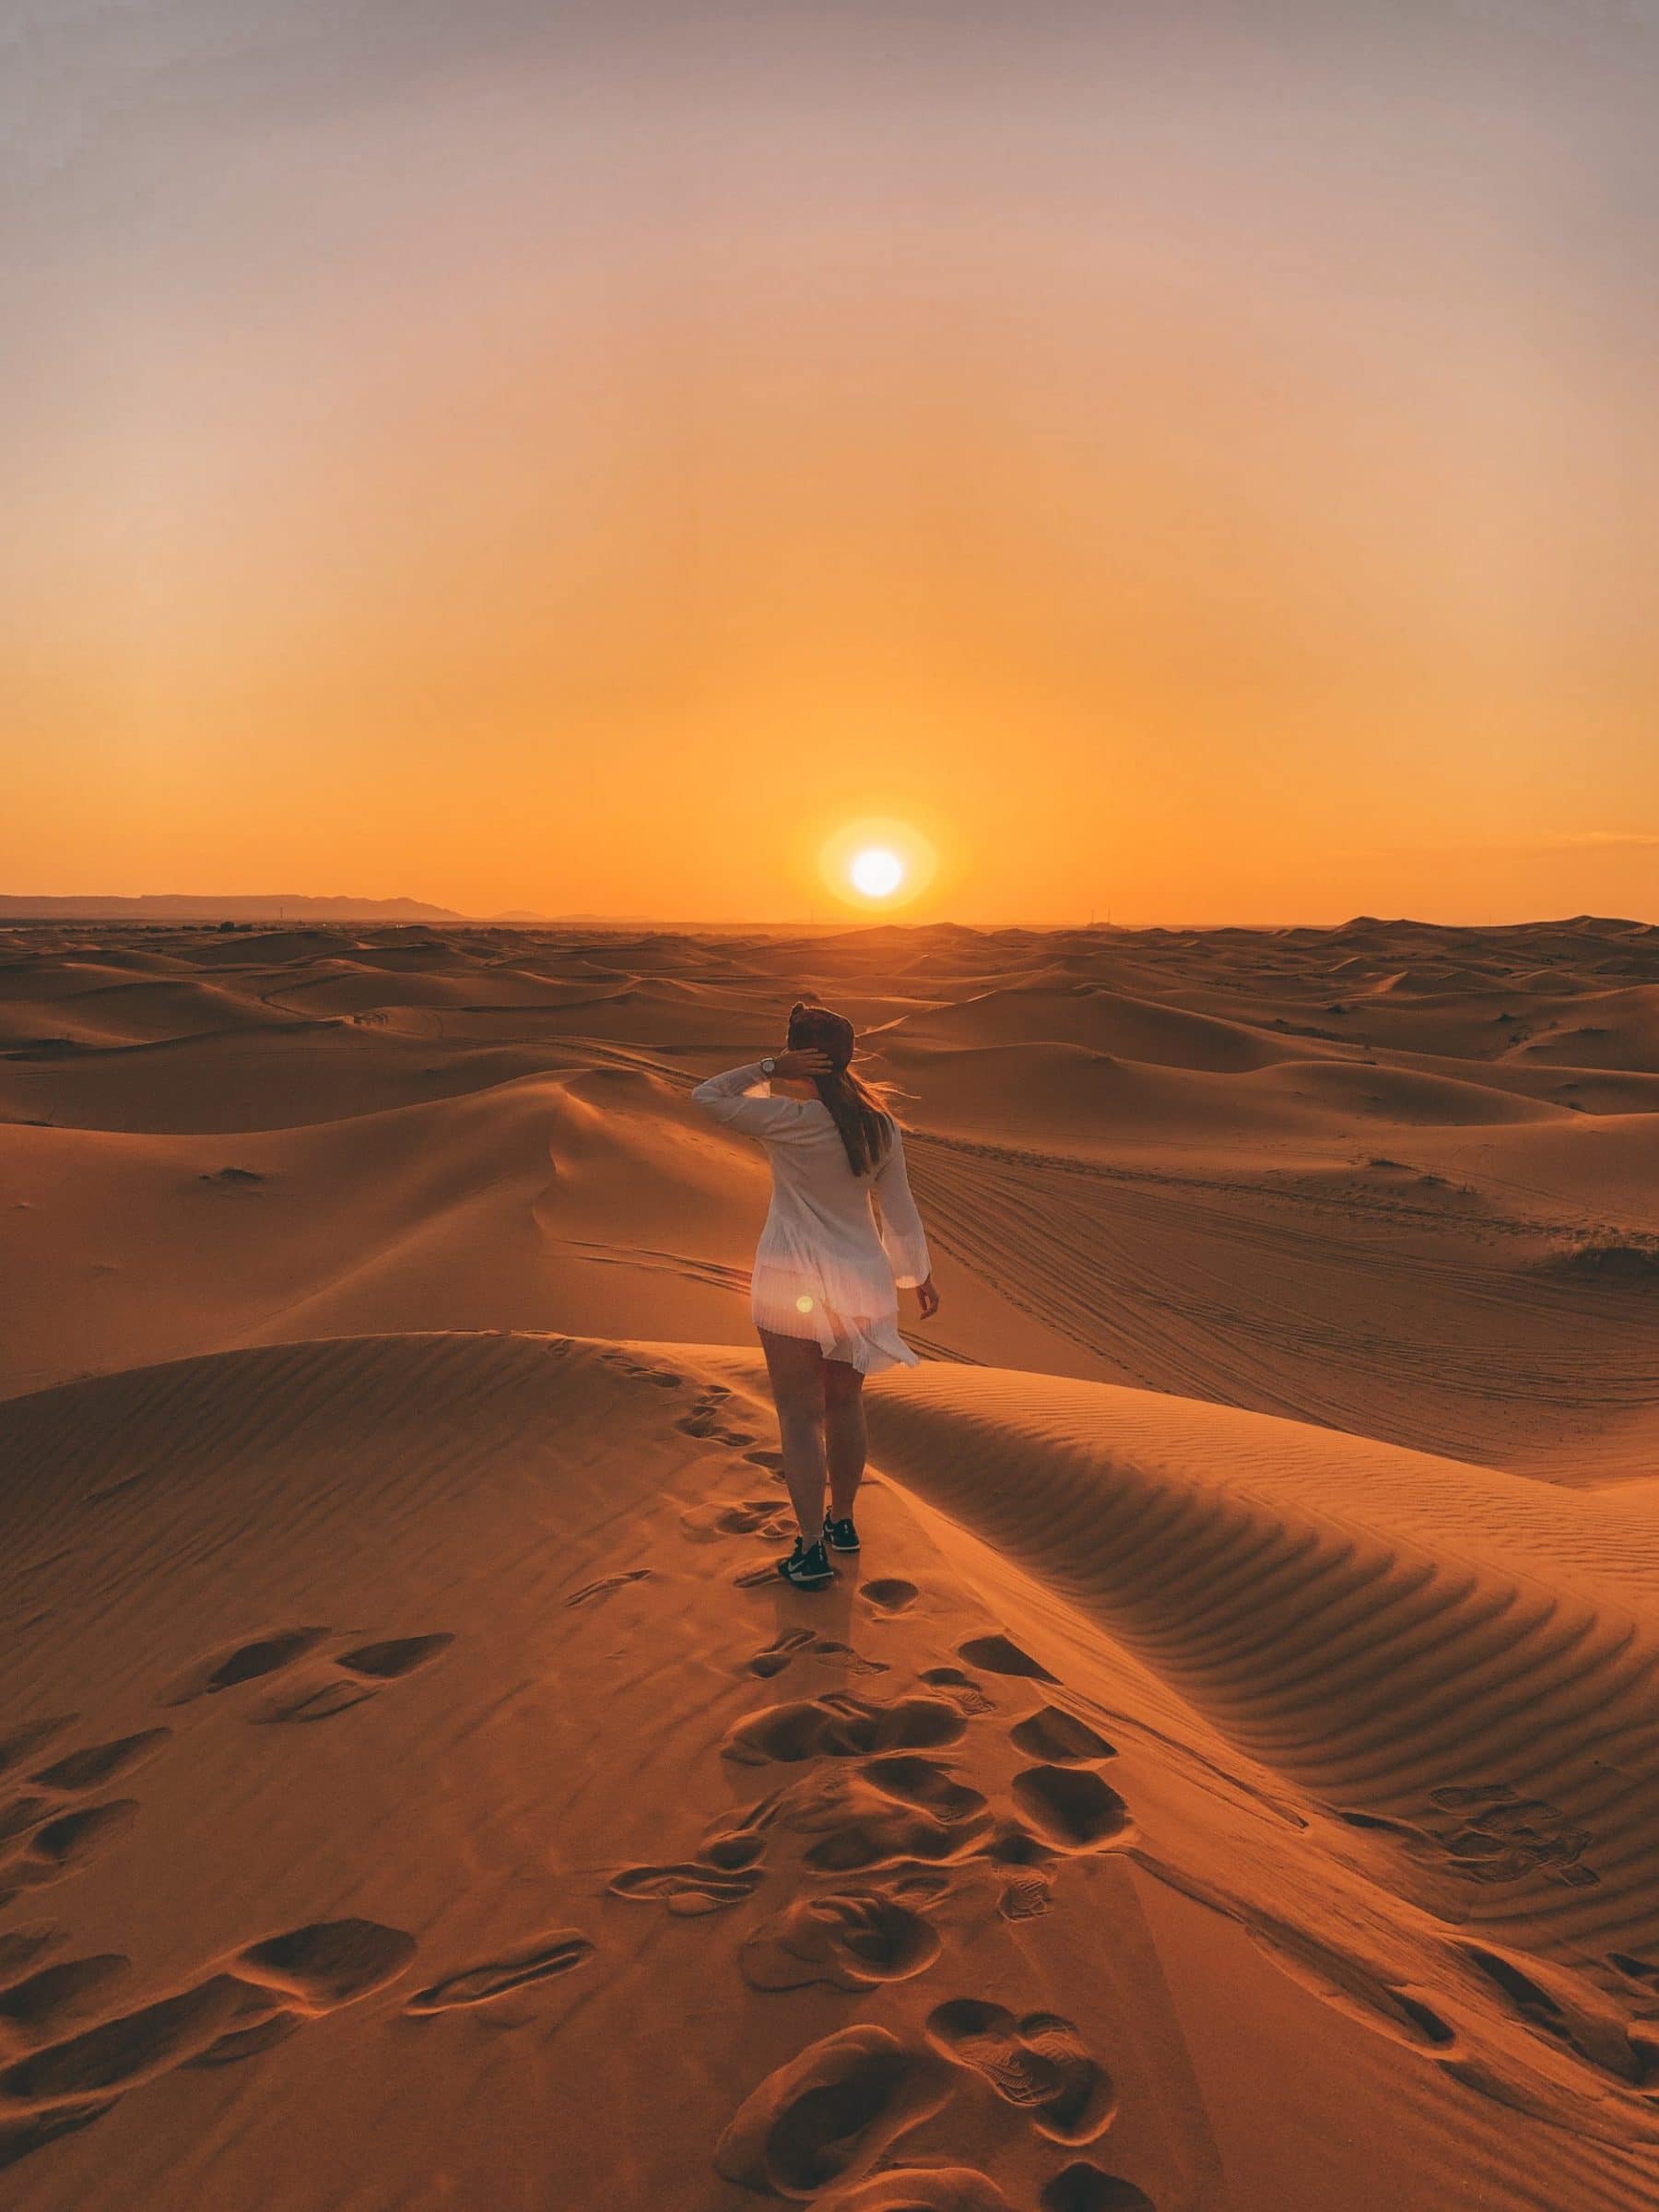 O pôr do sol no deserto do Saara - Marrocos